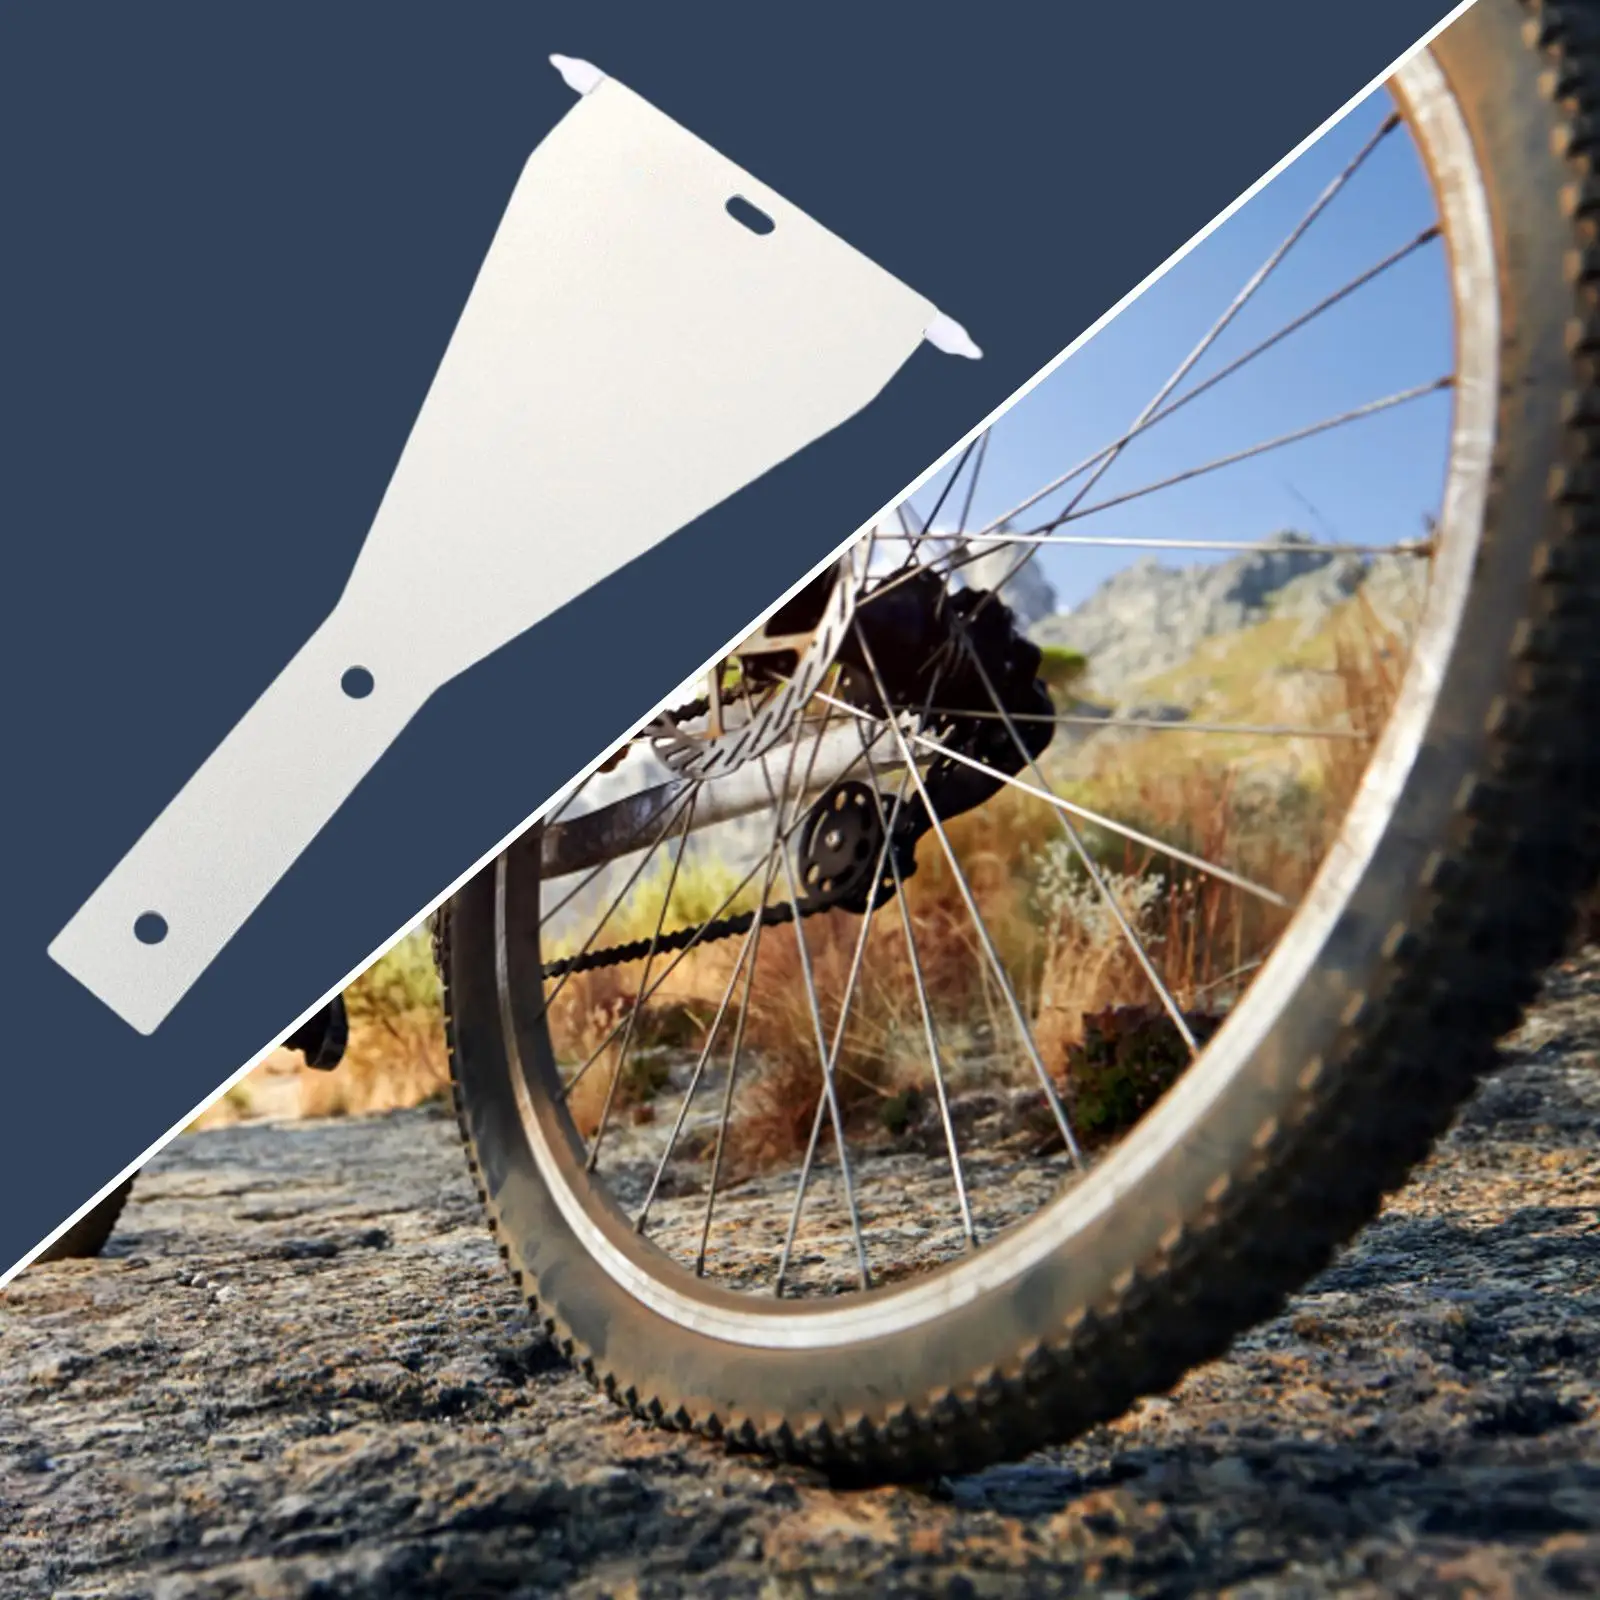 Bike Centering Gauge for Wheel Truing Stand Measurement Tool Balancer Aluminum Alloy Positioning Repair Tool for Mountain Bike